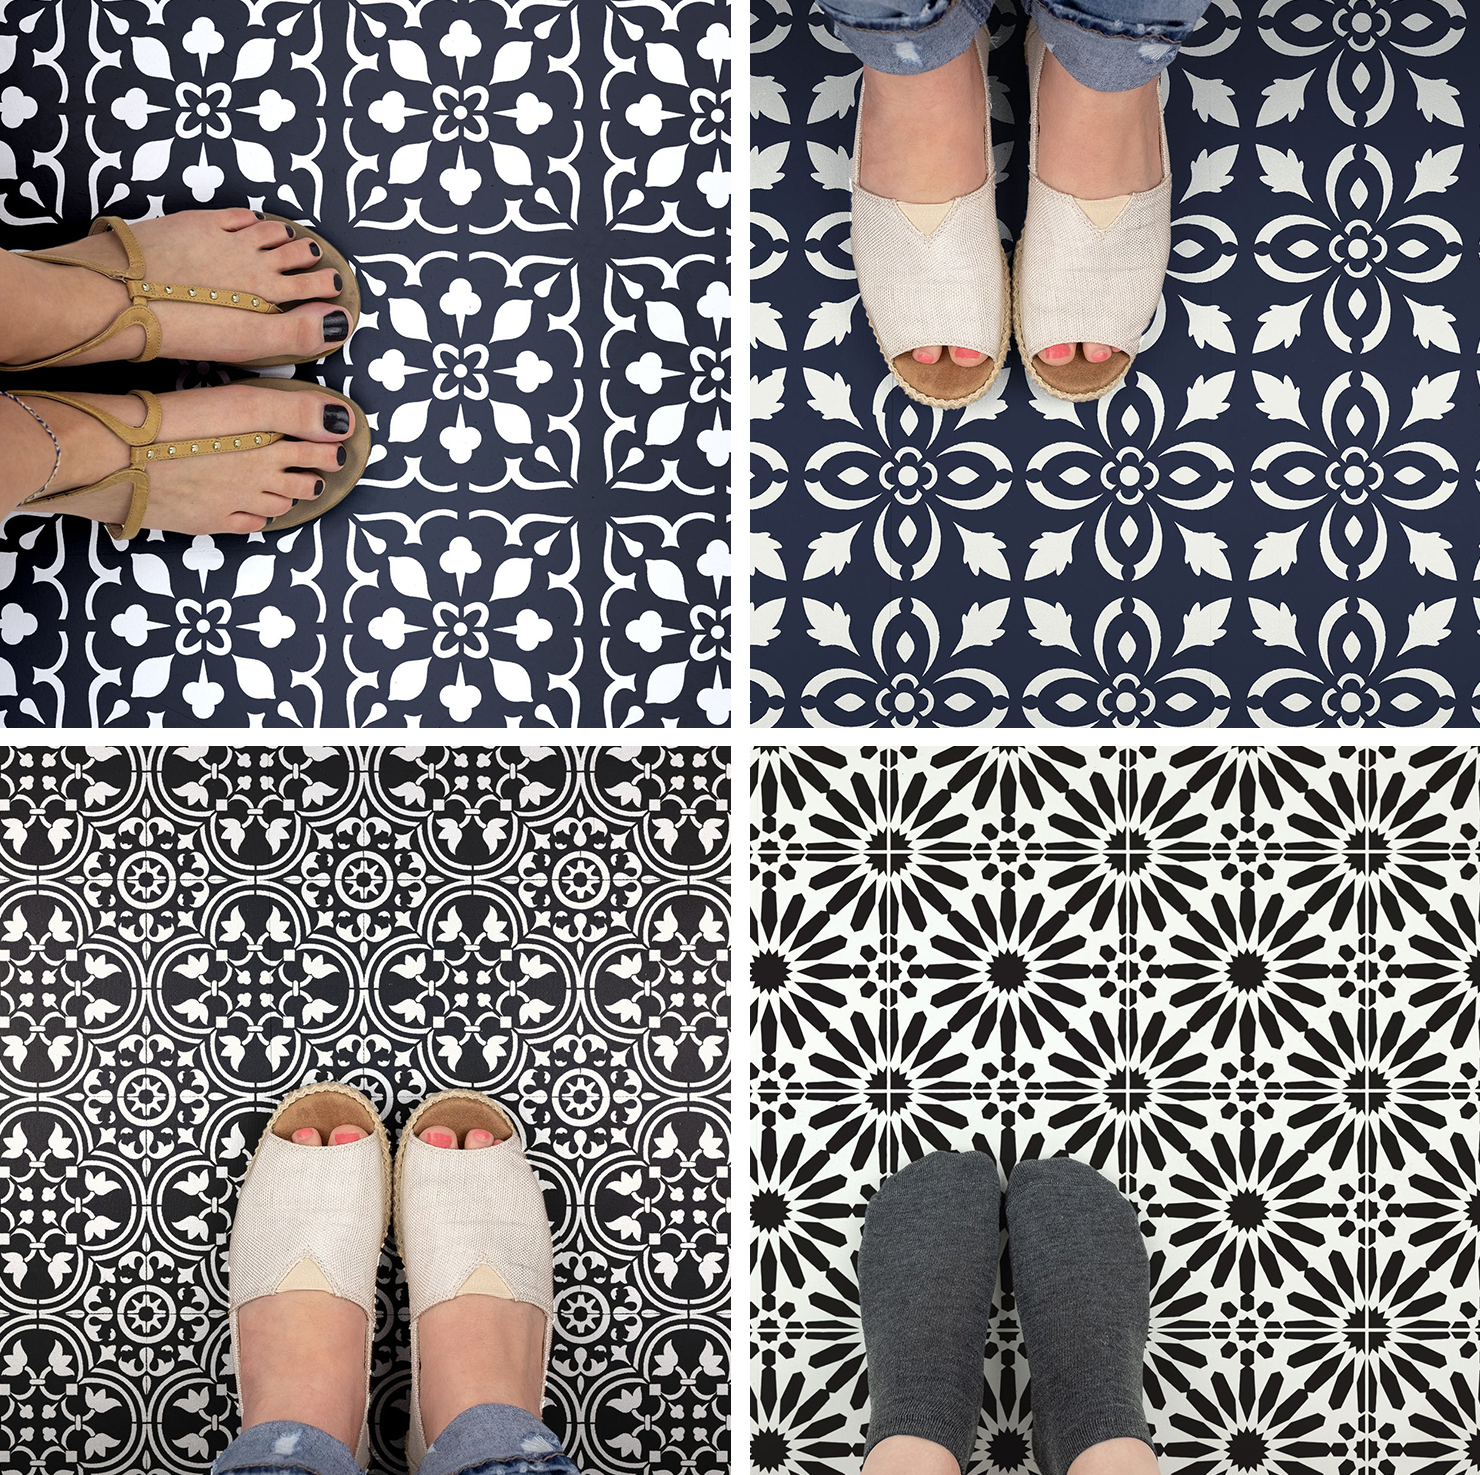 How to stencil Floor Tiles